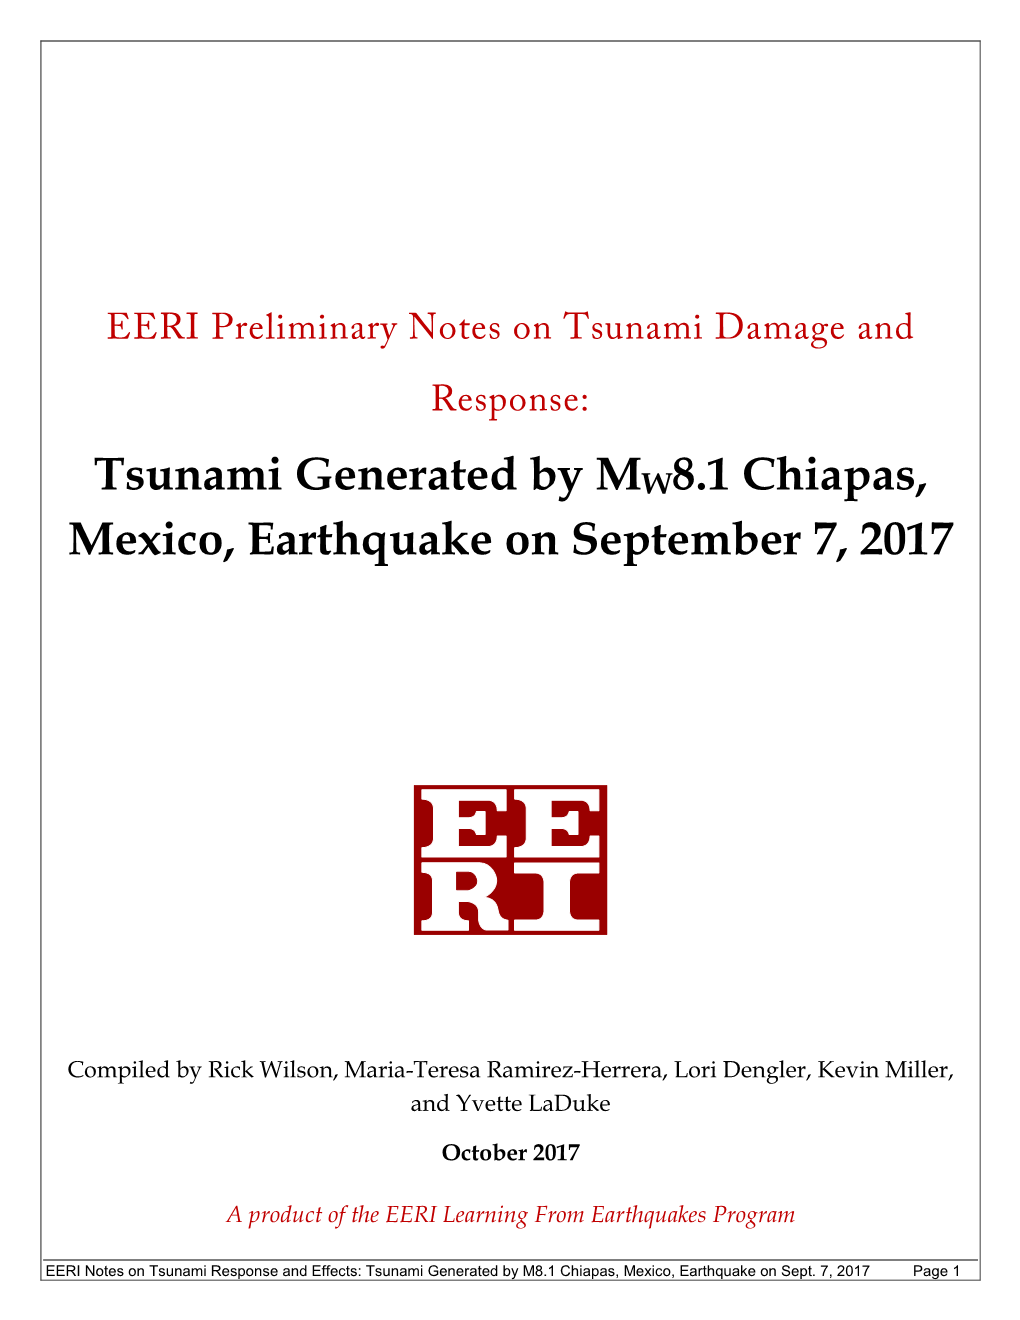 Tsunami Generated by MW8.1 Chiapas, Mexico, Earthquake on September 7, 2017